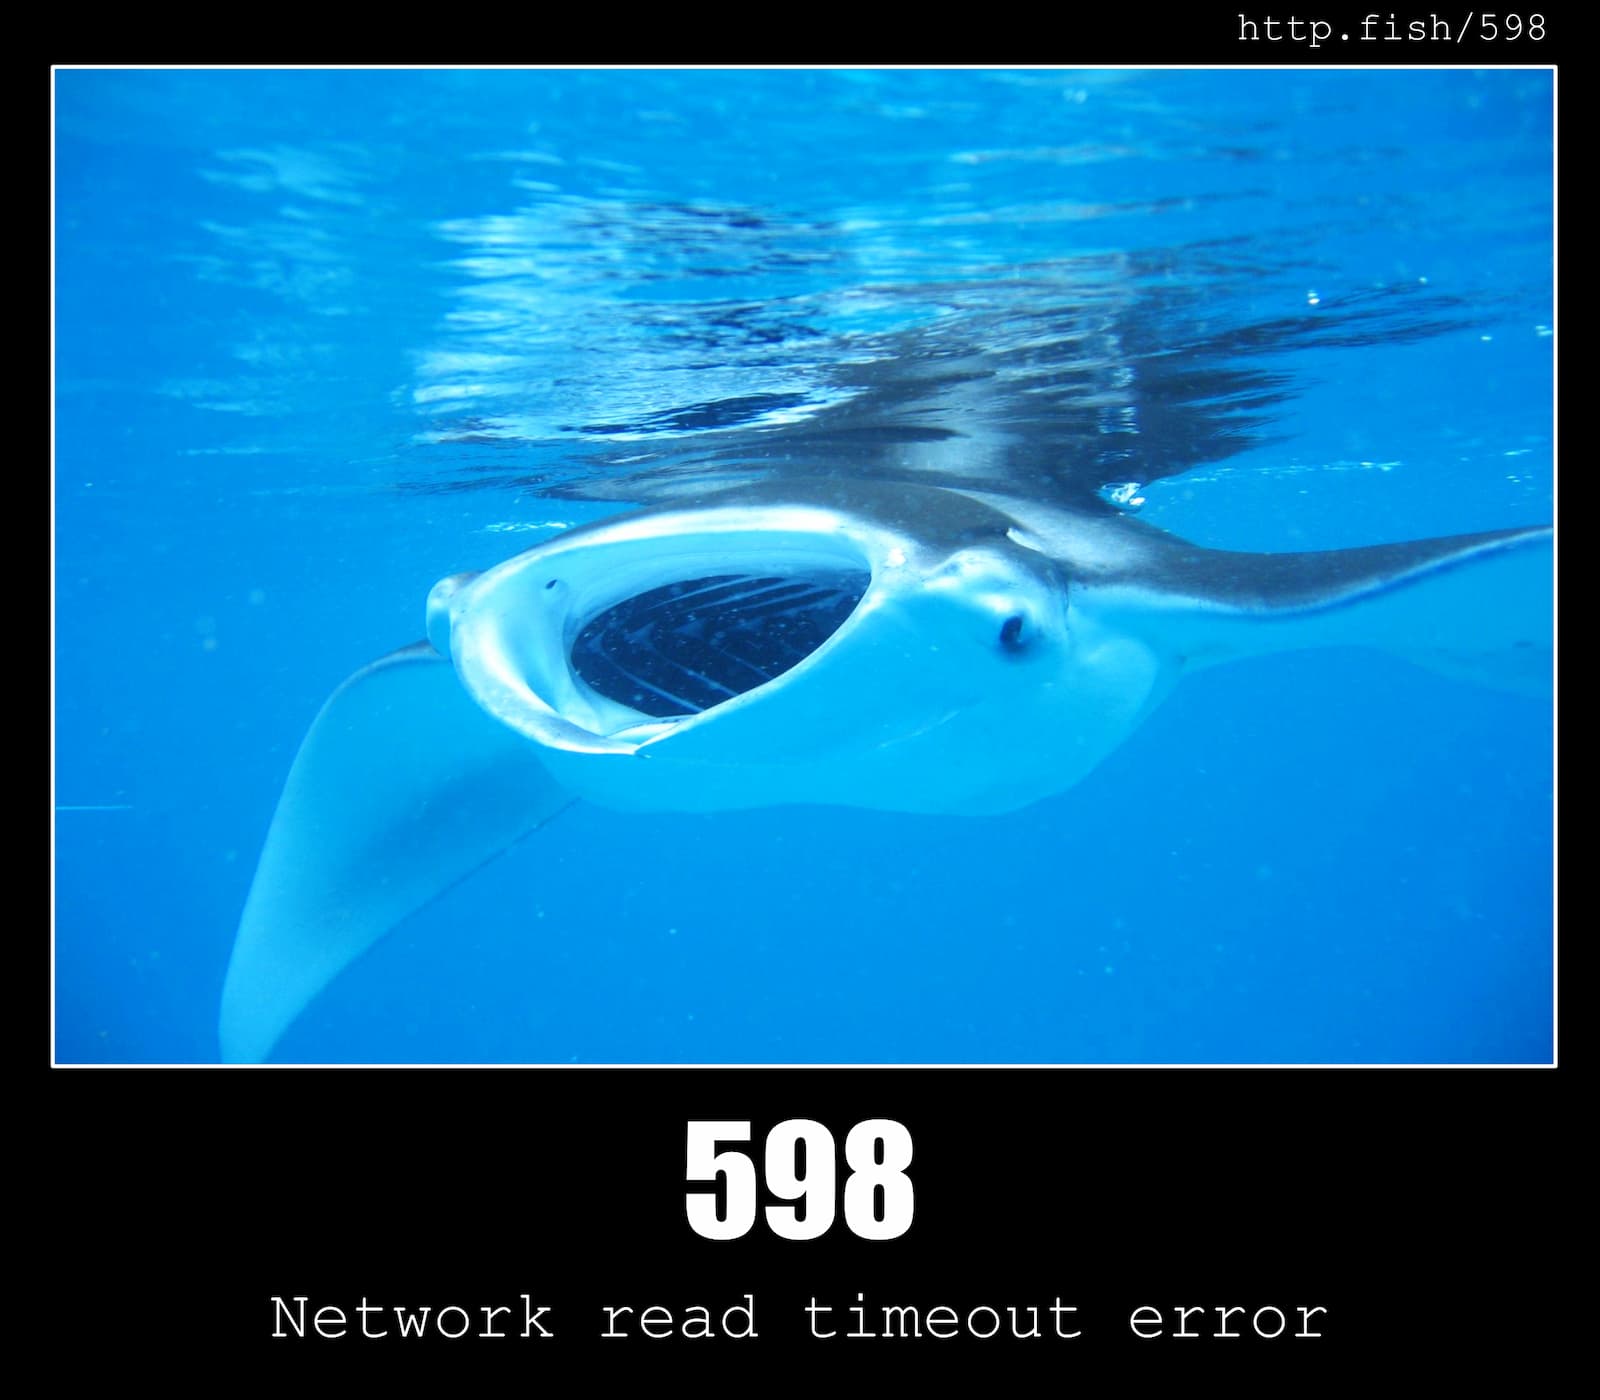 HTTP Status Code 598 Network read timeout error & Fish